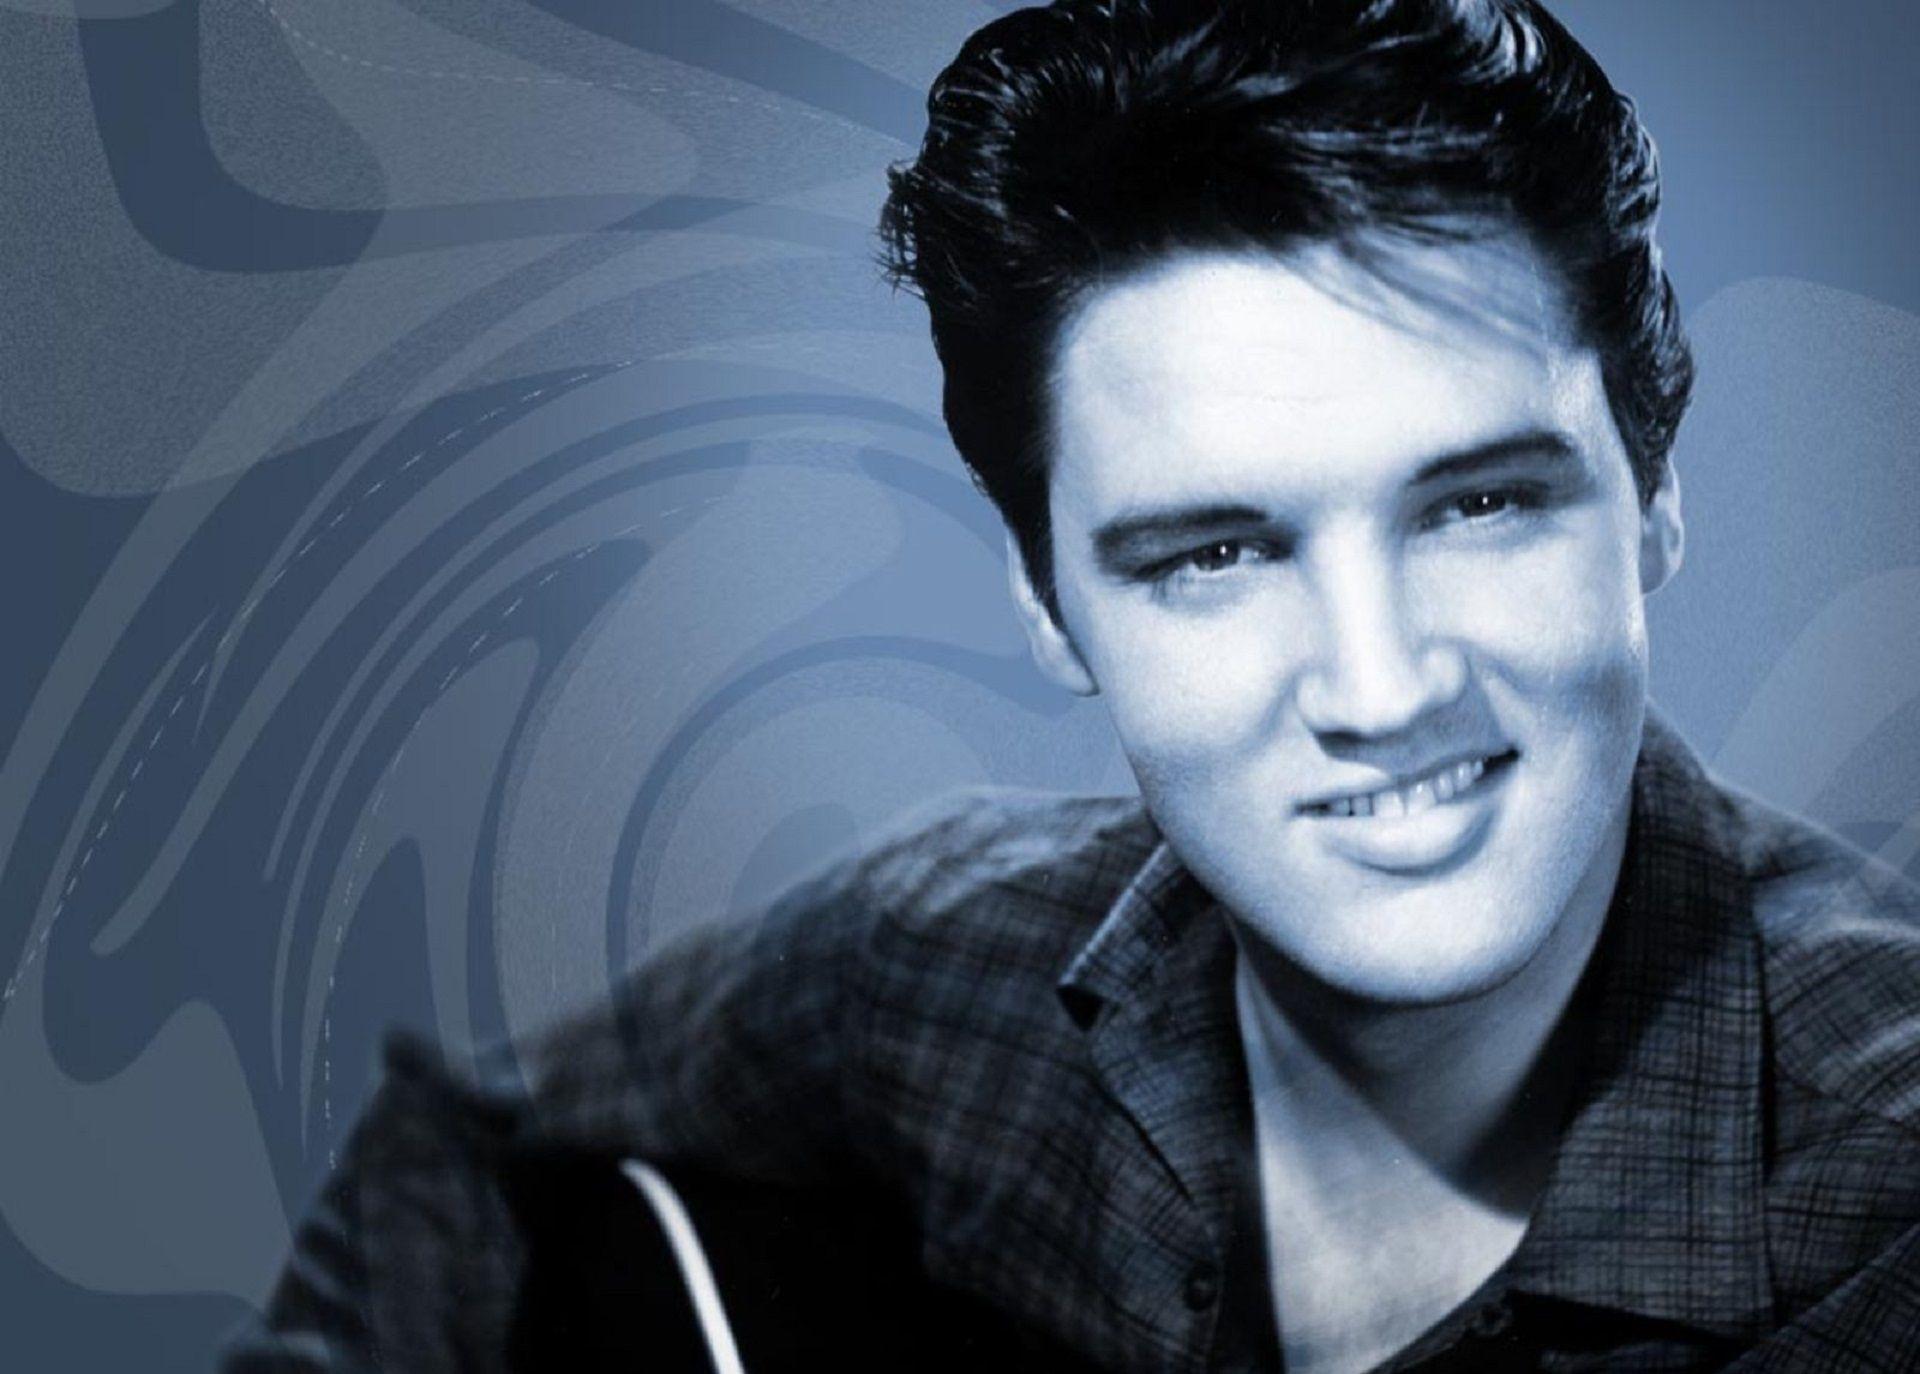 Elvis Presley Wallpaper Image Photo Picture Background